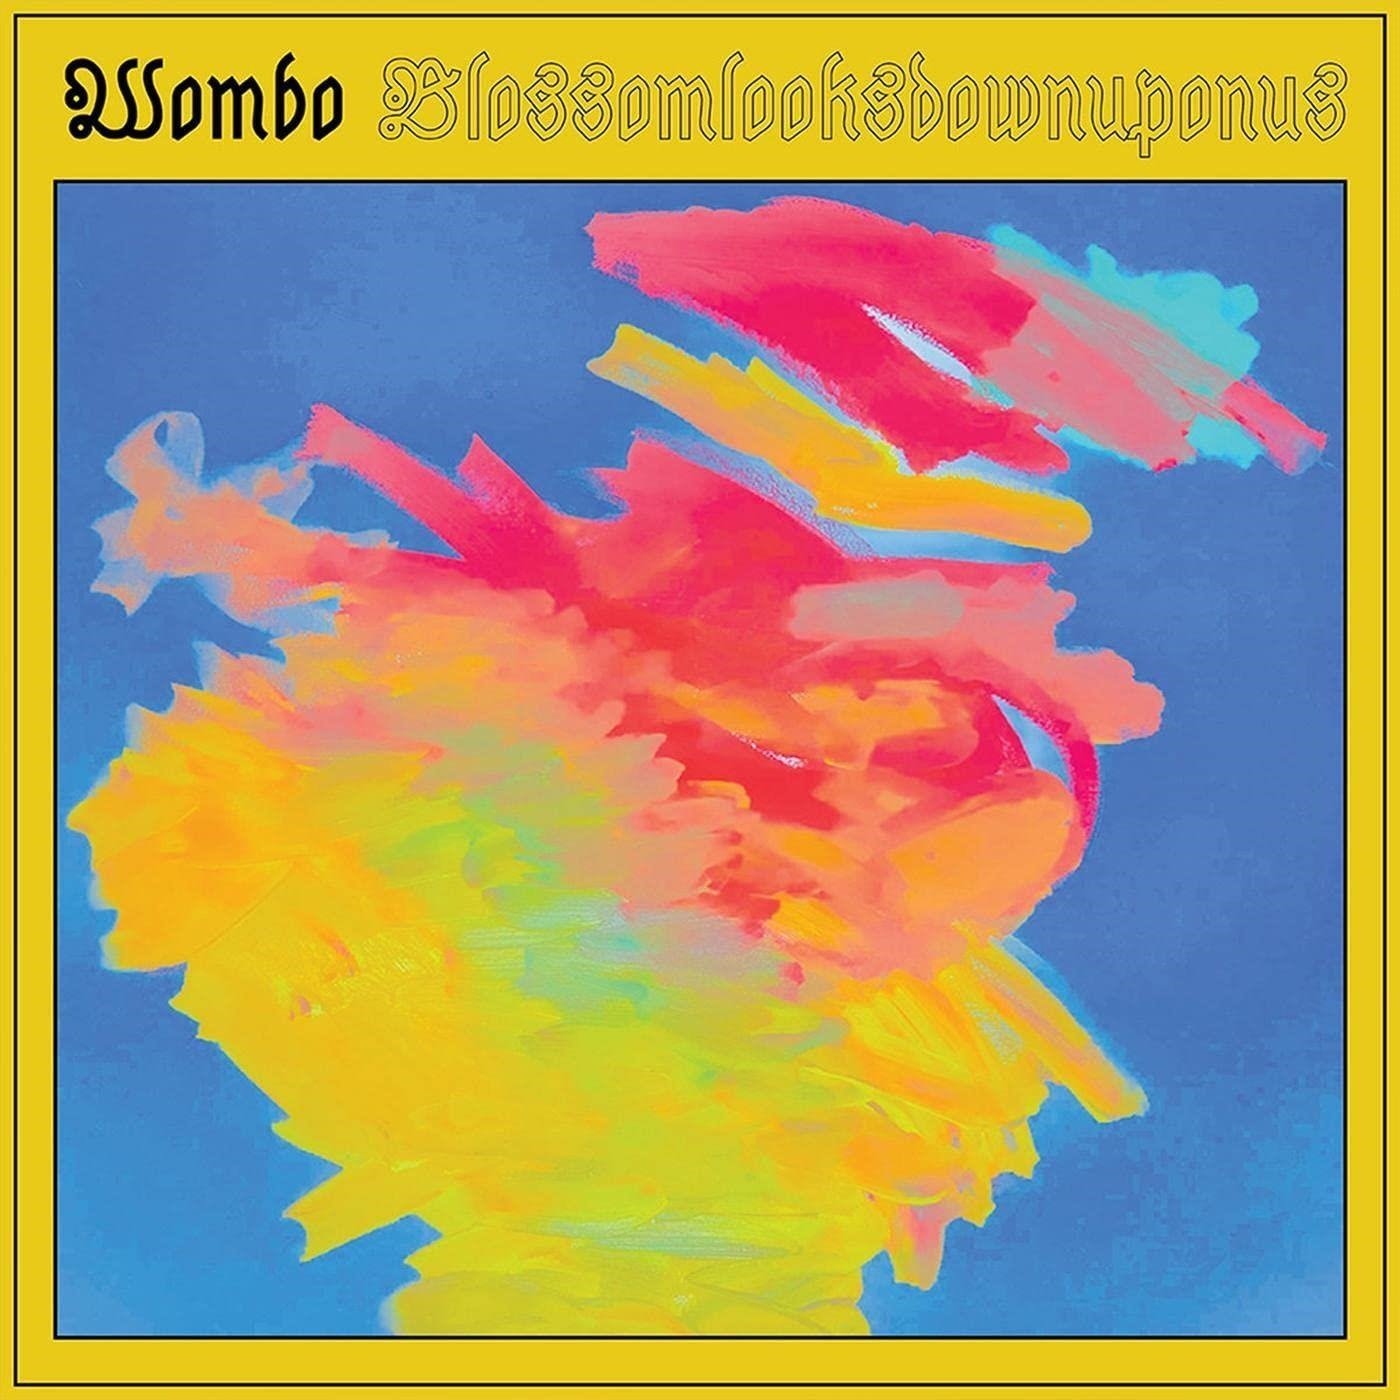 CD Shop - WOMBO BLOSSOMLOOKSDOWNUPONUS